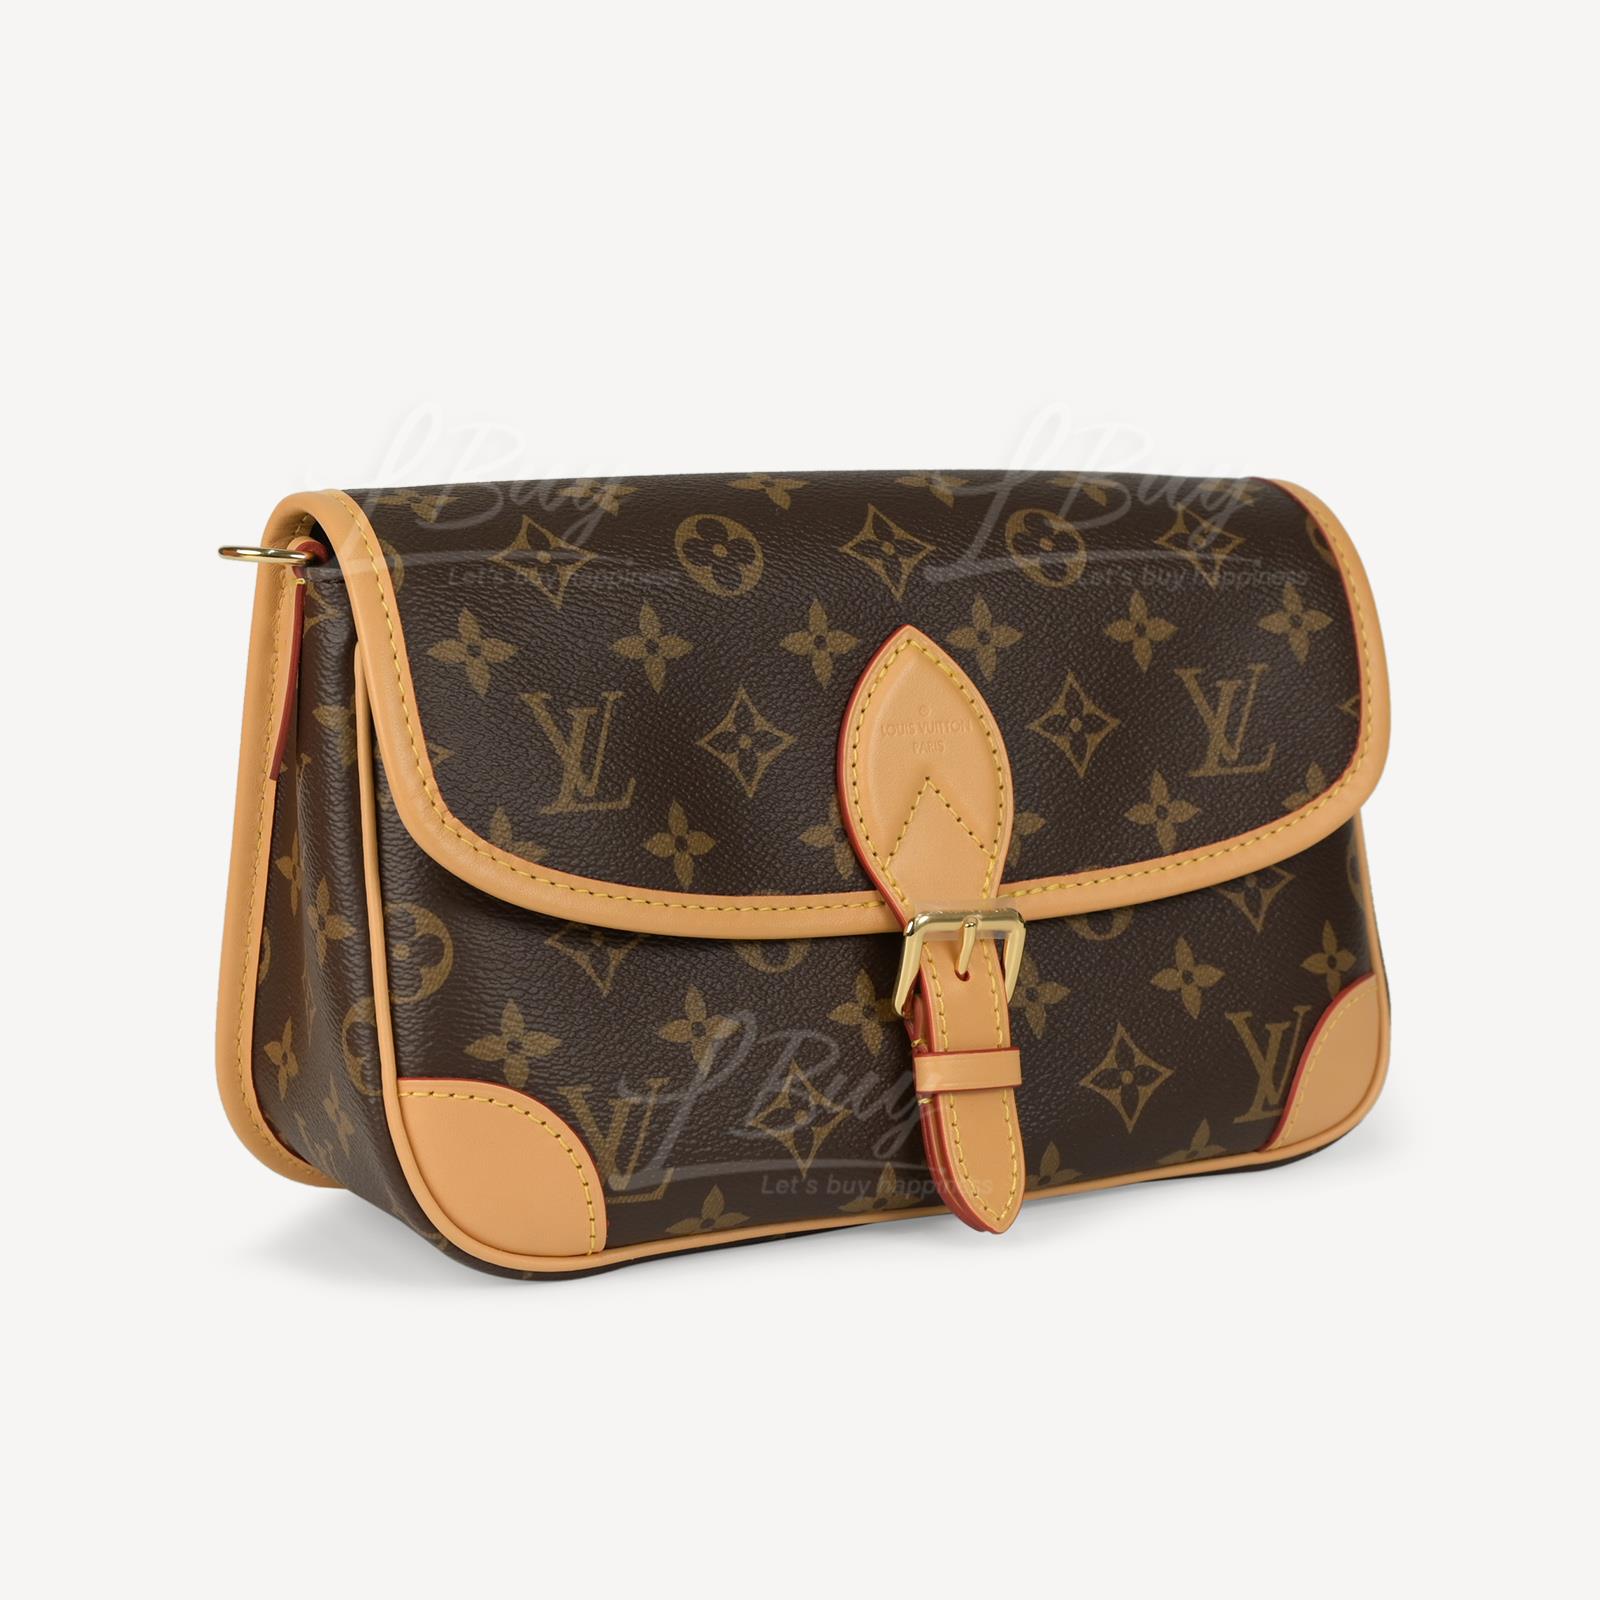 LV DIANE M45985  Bags, Luxury bags, Louis vuitton bag